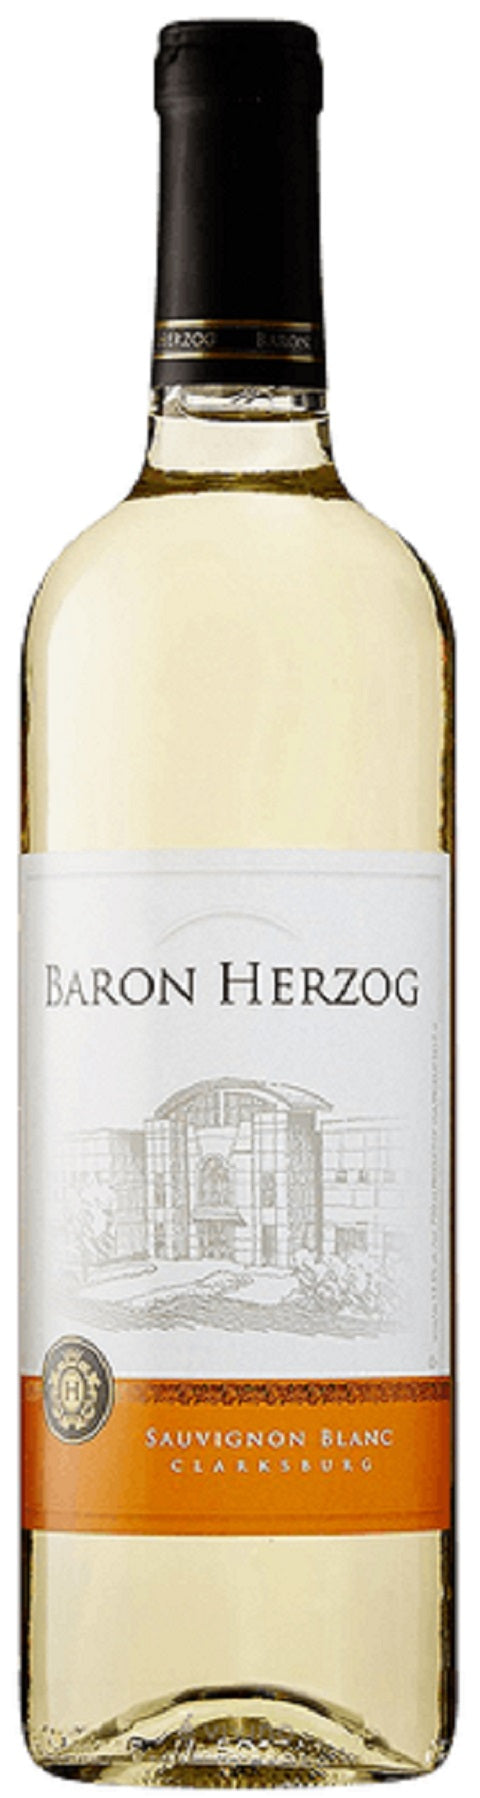 Baron Herzog Sauvignon Blanc 2019